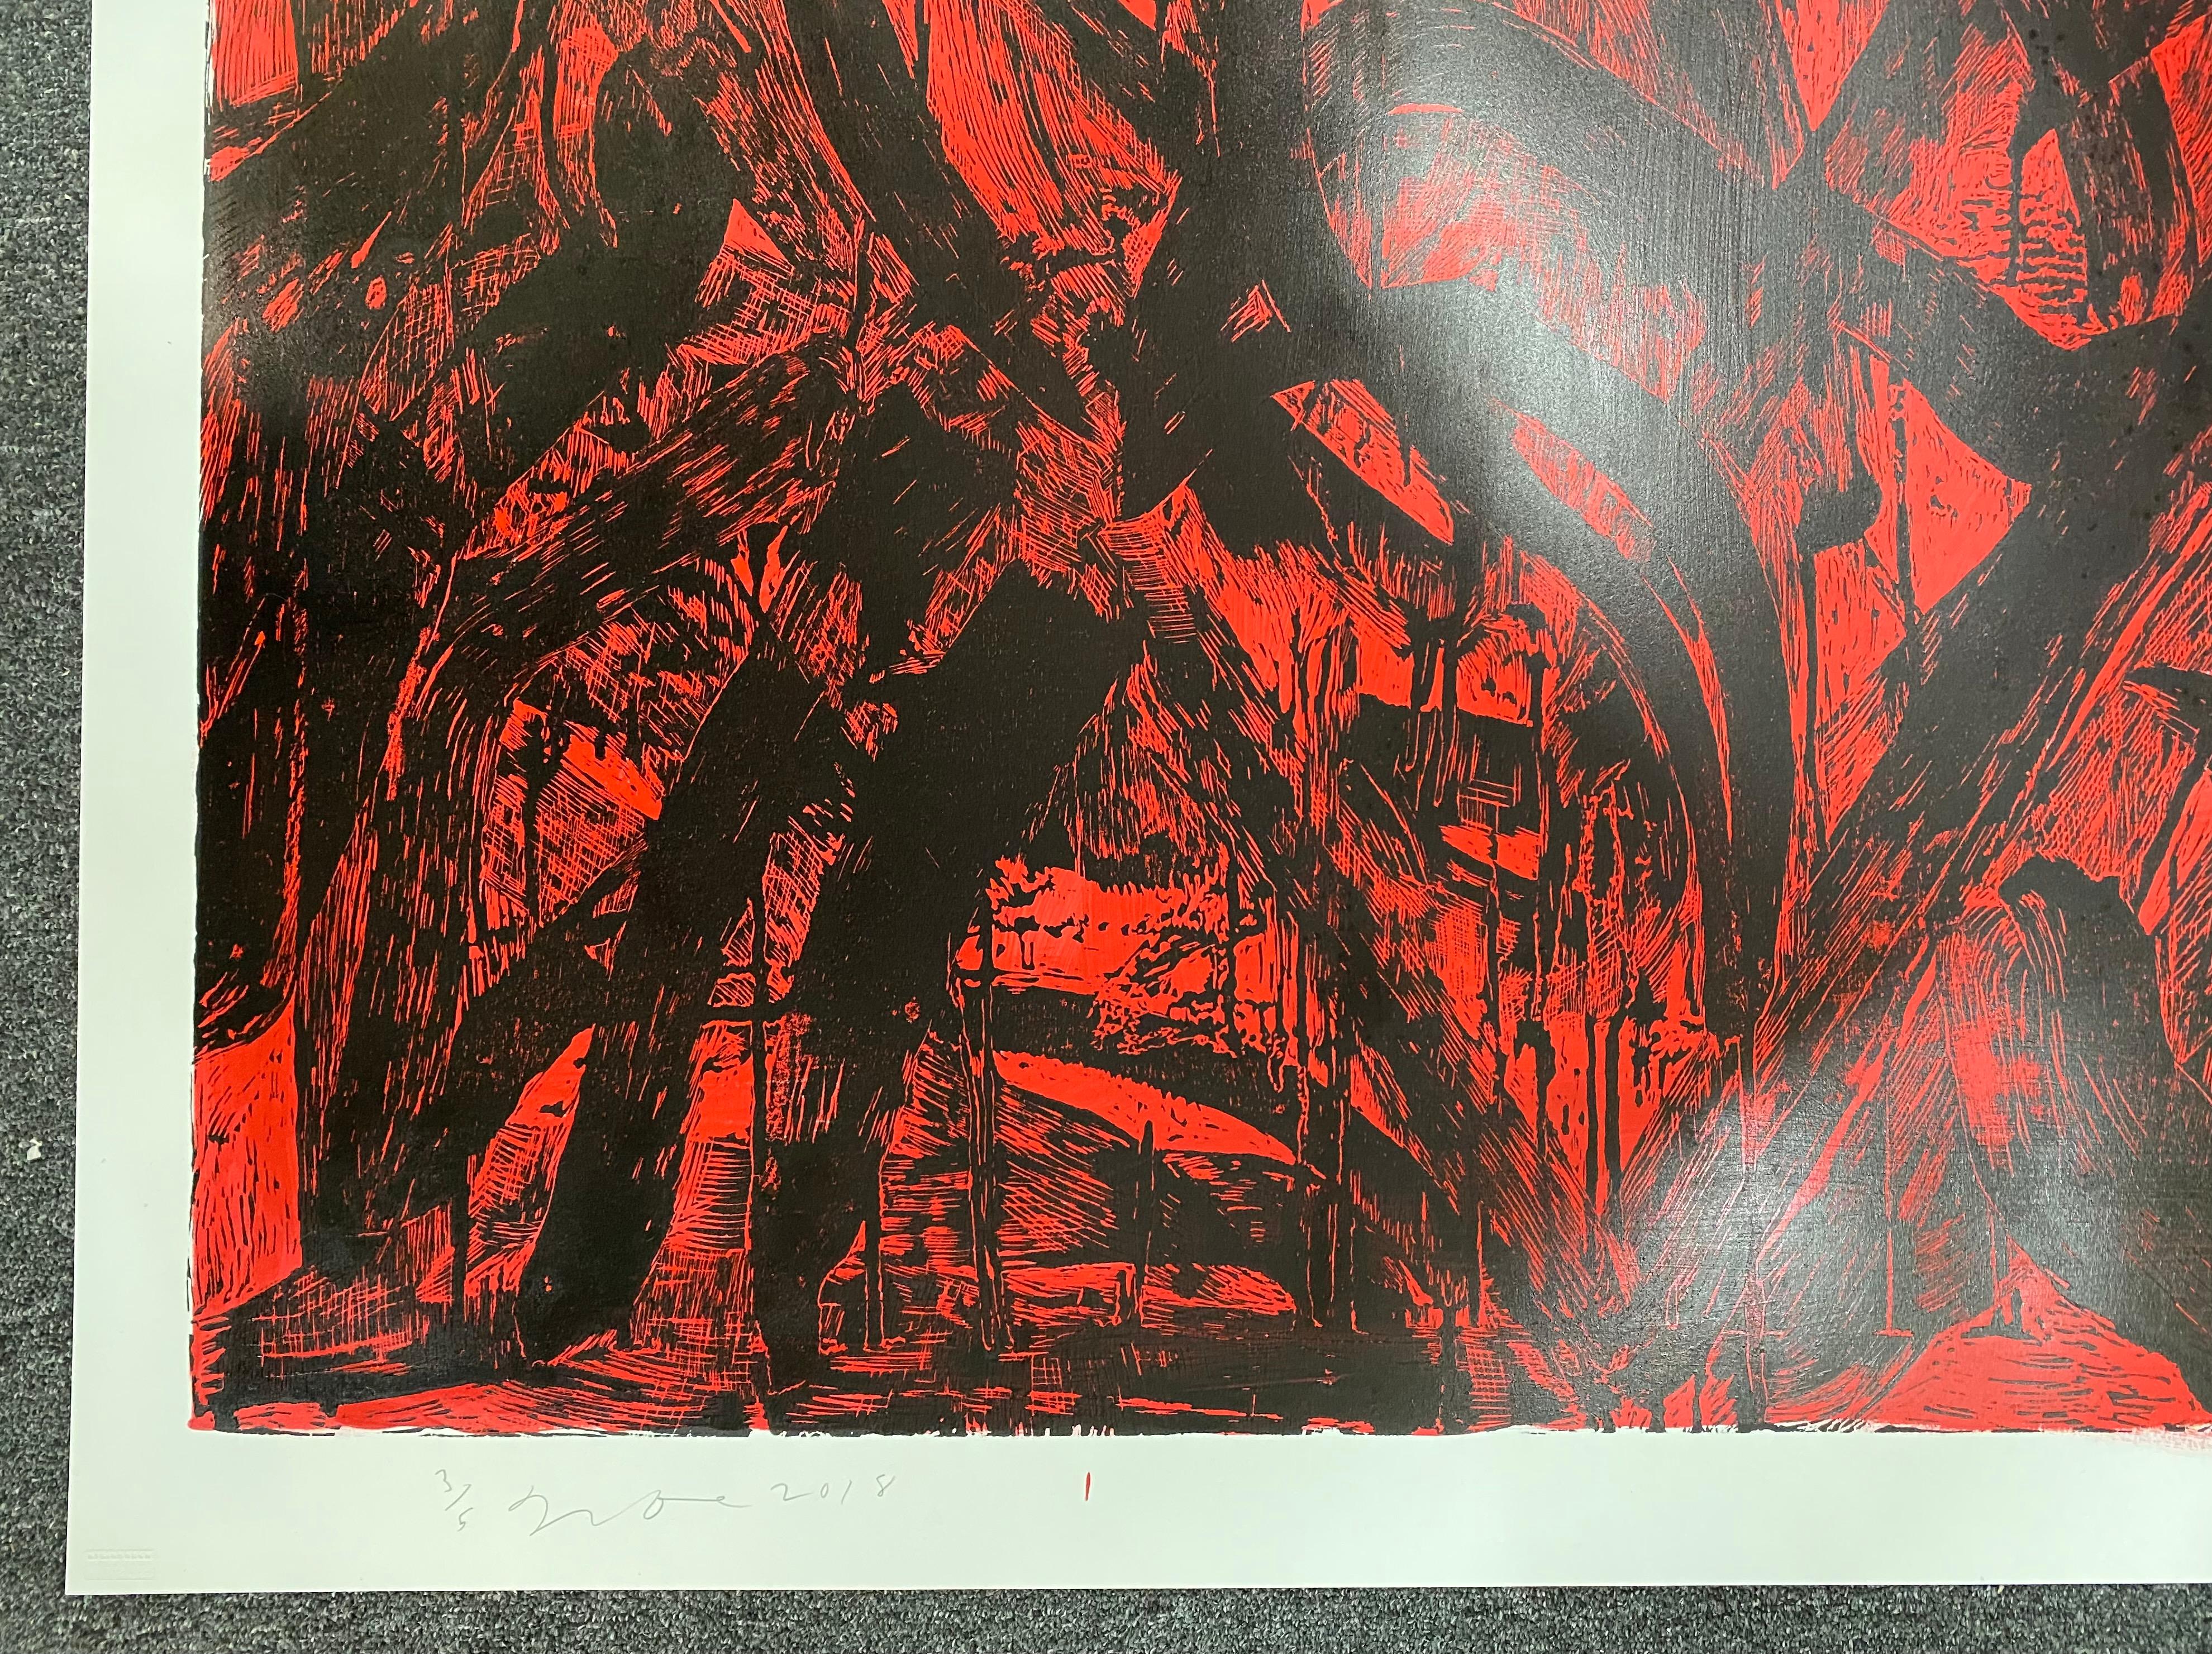 The Red Talisman - Print by Jim Dine